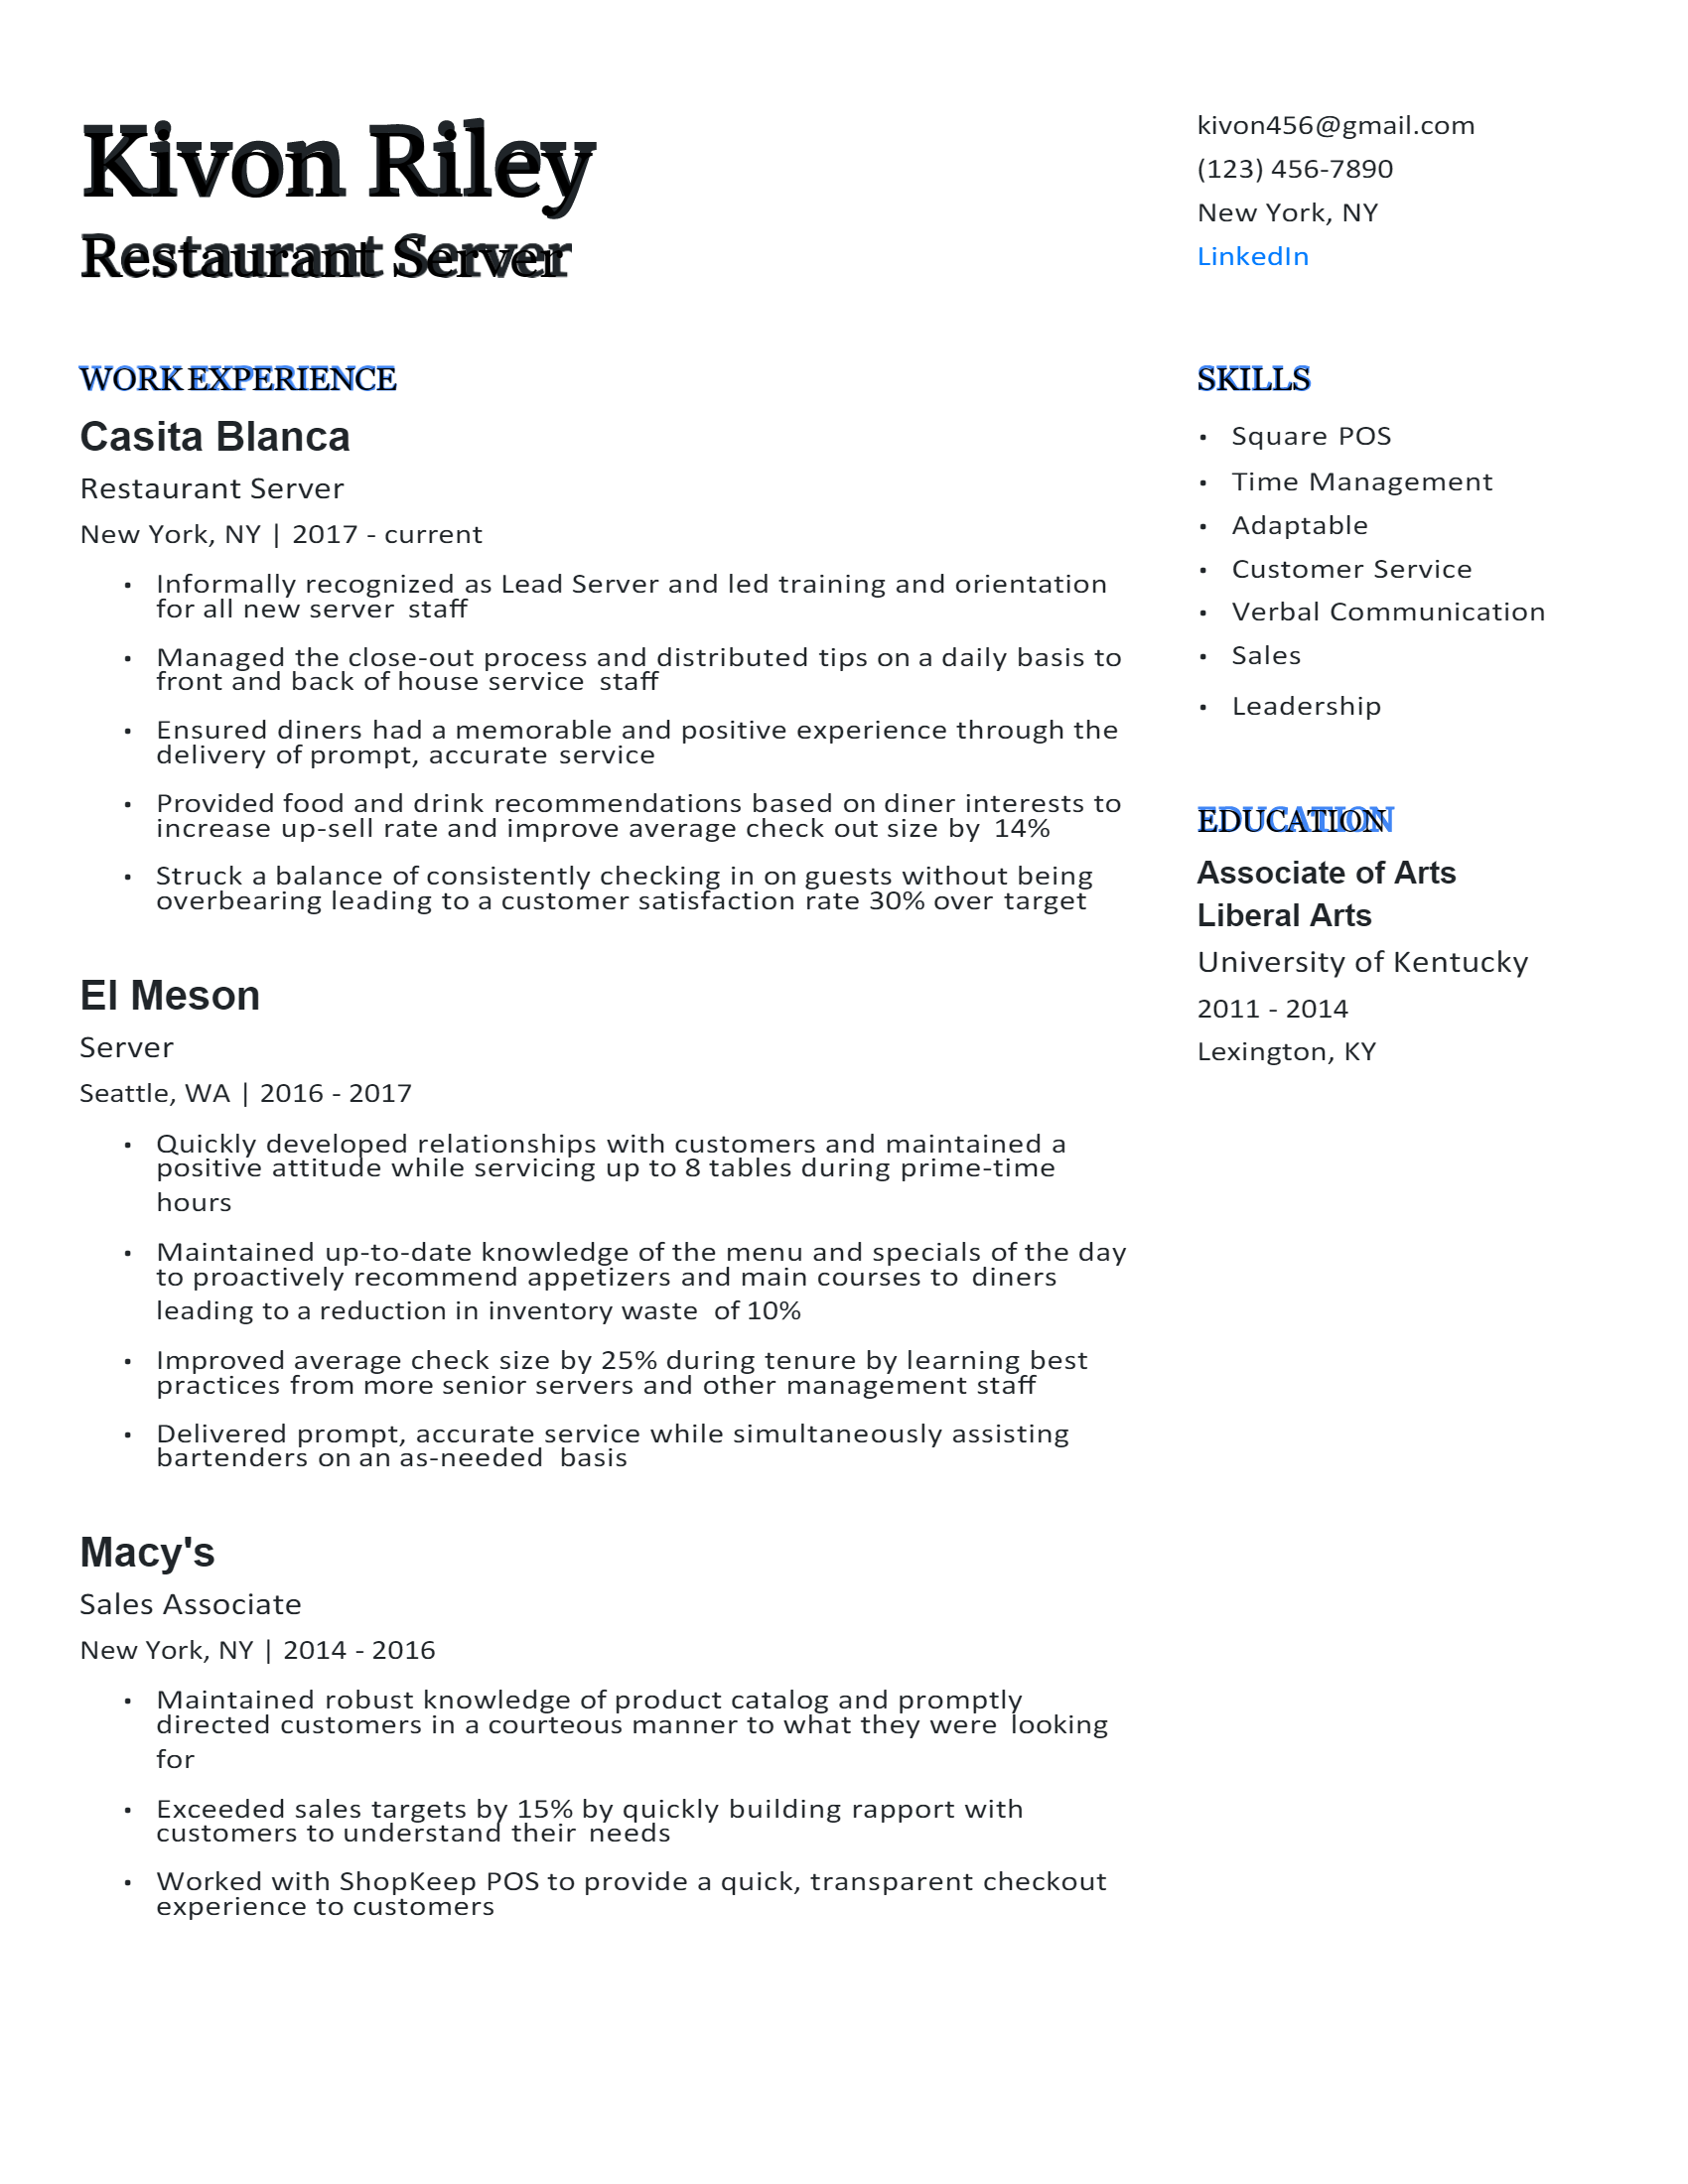 Experienced Restaurant Server Resume .Docx (Word)